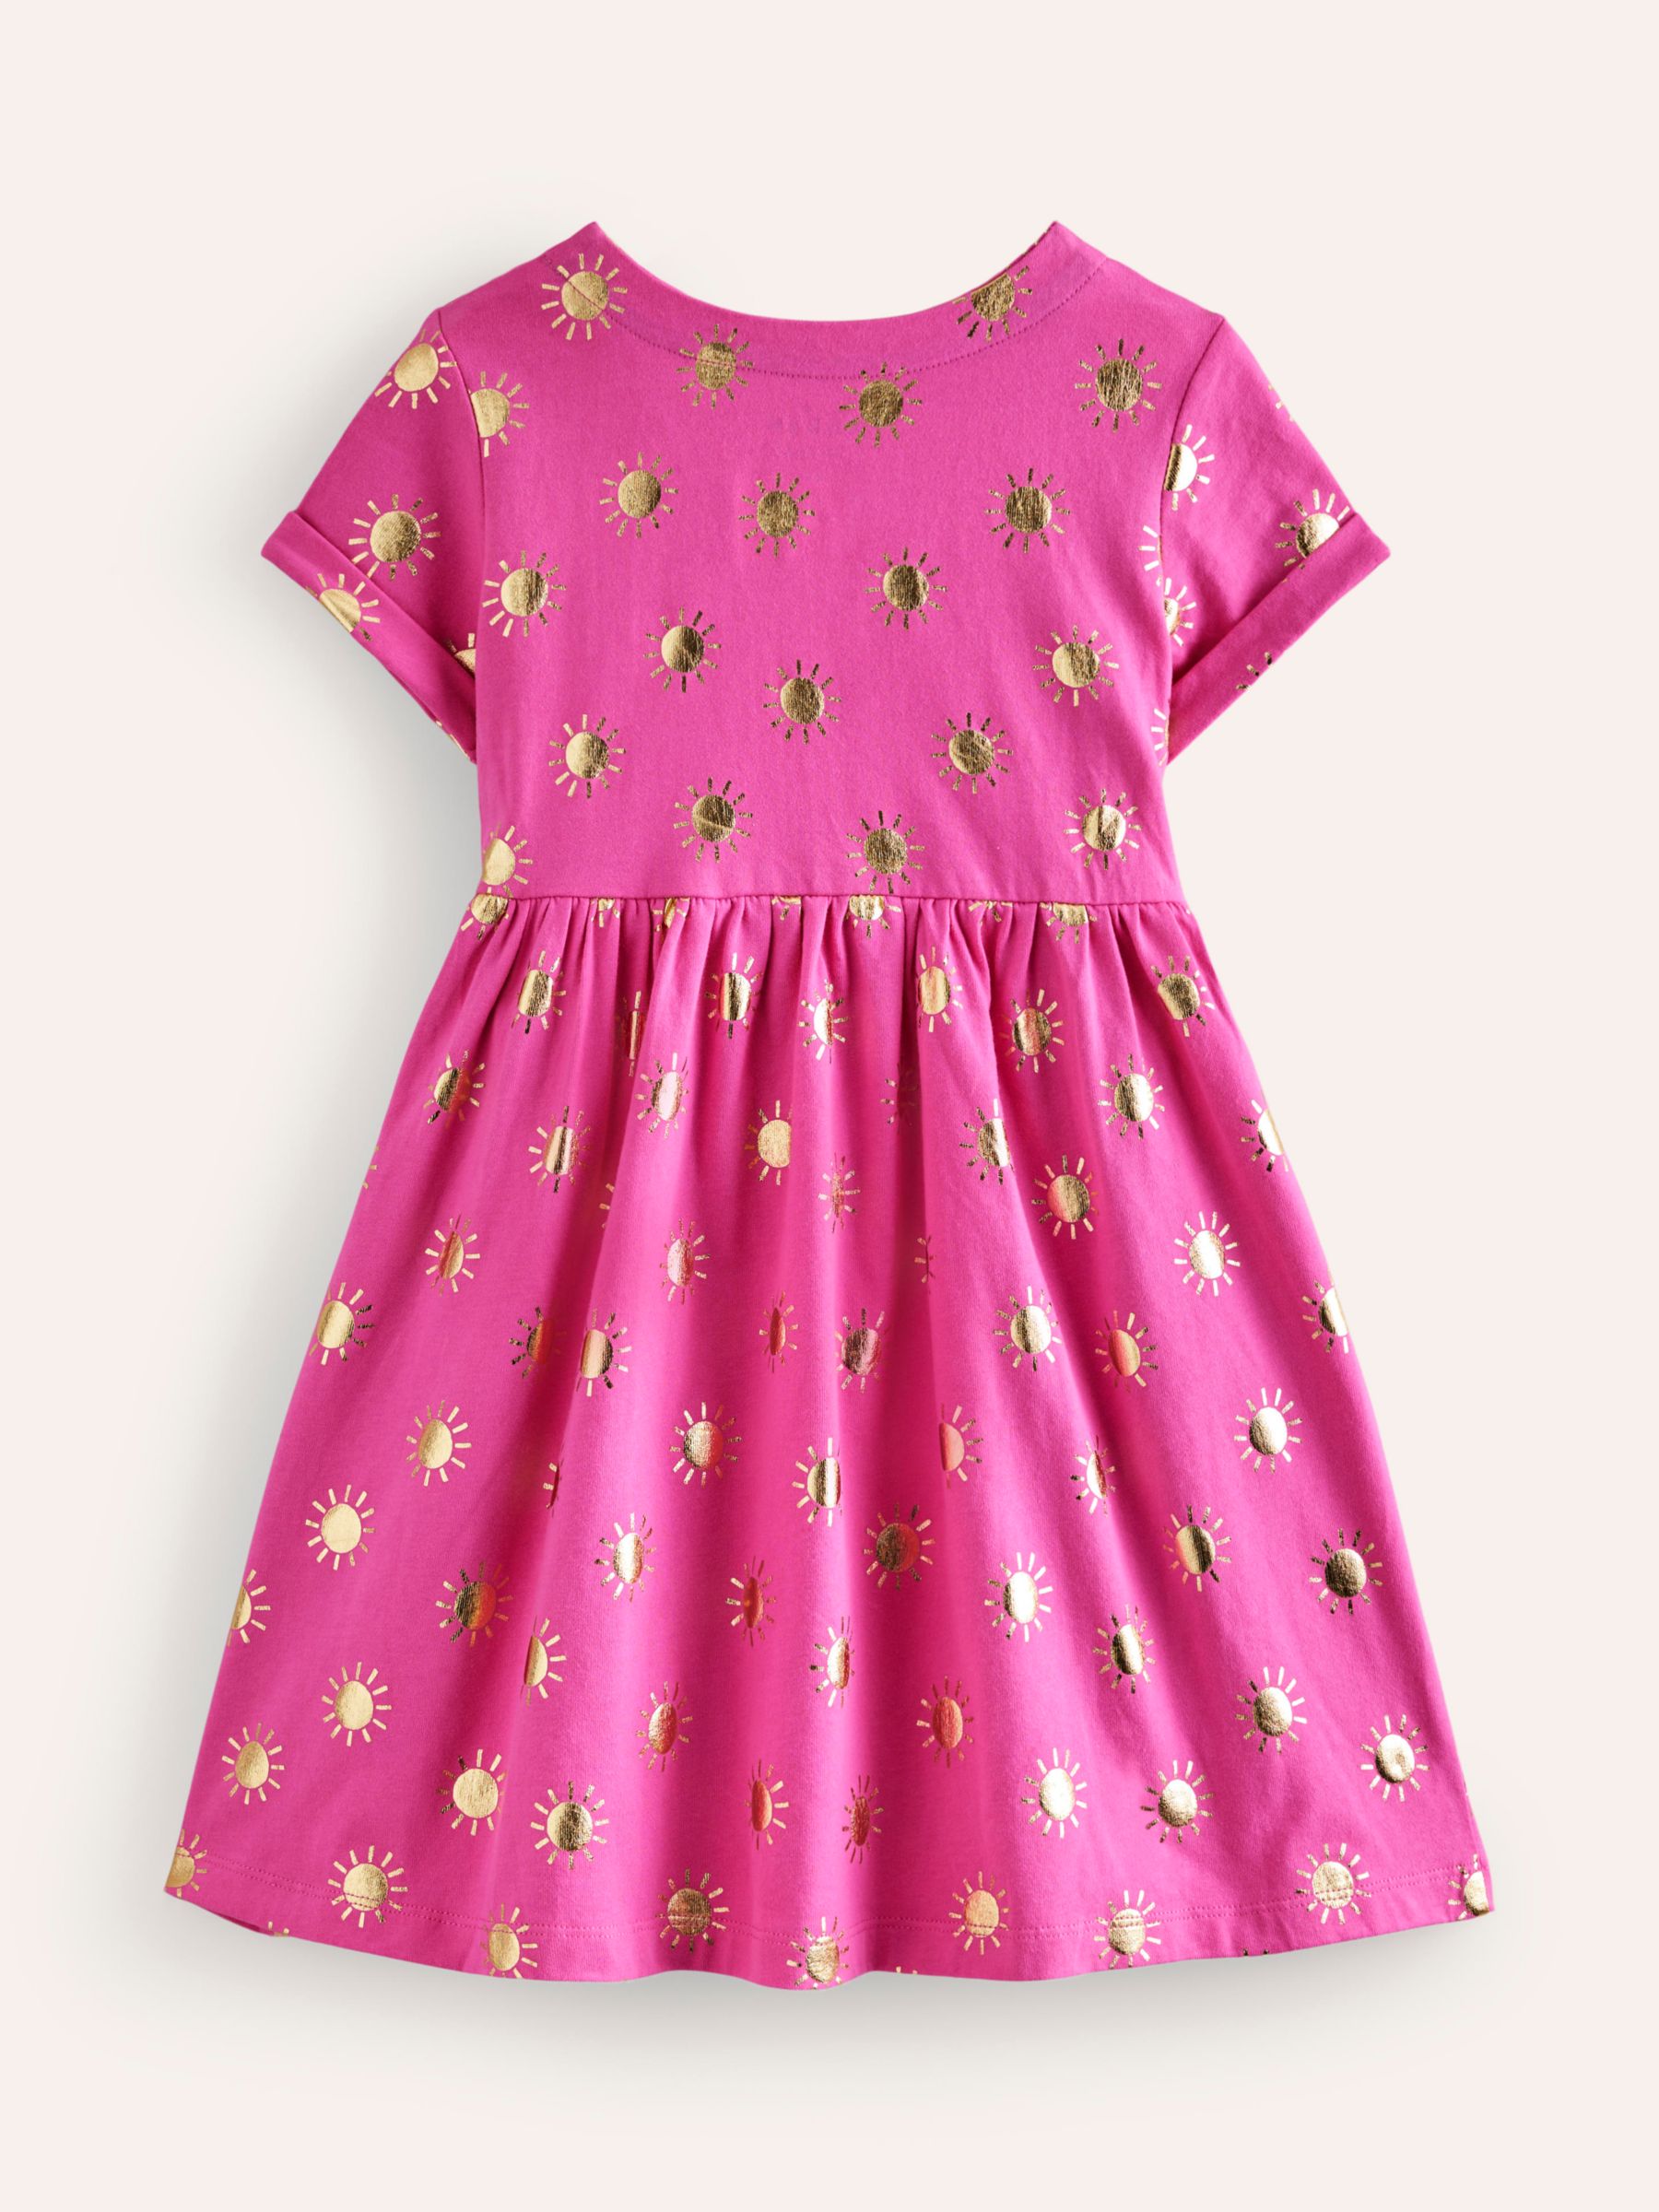 Mini Boden Kids' Suns Short Sleeve Jersey Dress, Pink/Gold, 4-5 years